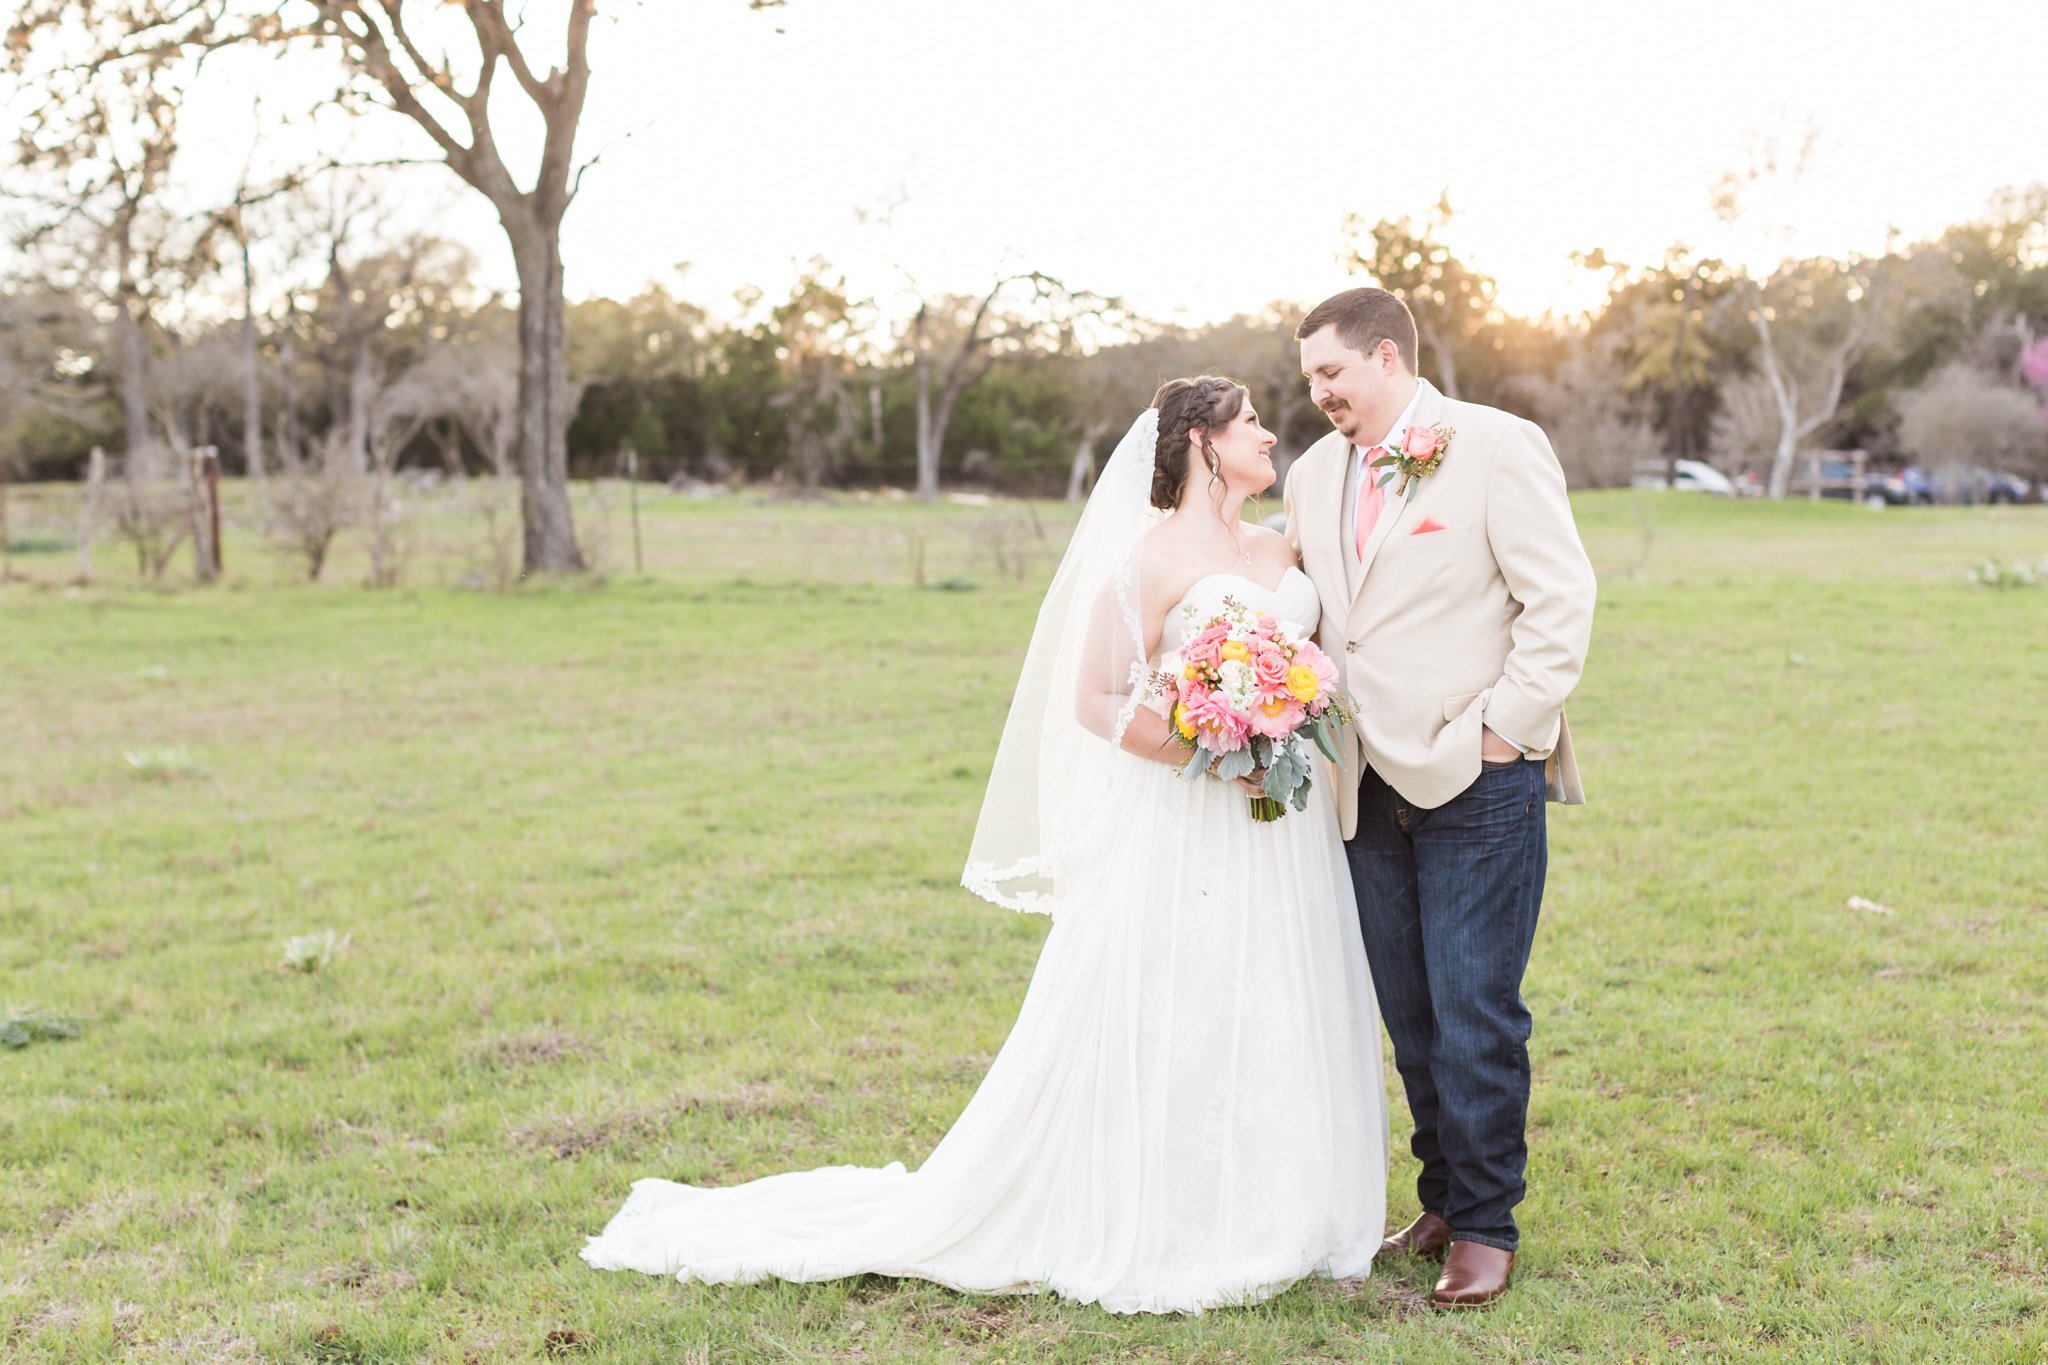 A Coral and Ivory Wedding at The Marquardt Ranch in Boerne, TX by Dawn Elizabeth Studios, San Antonio Wedding Photographer